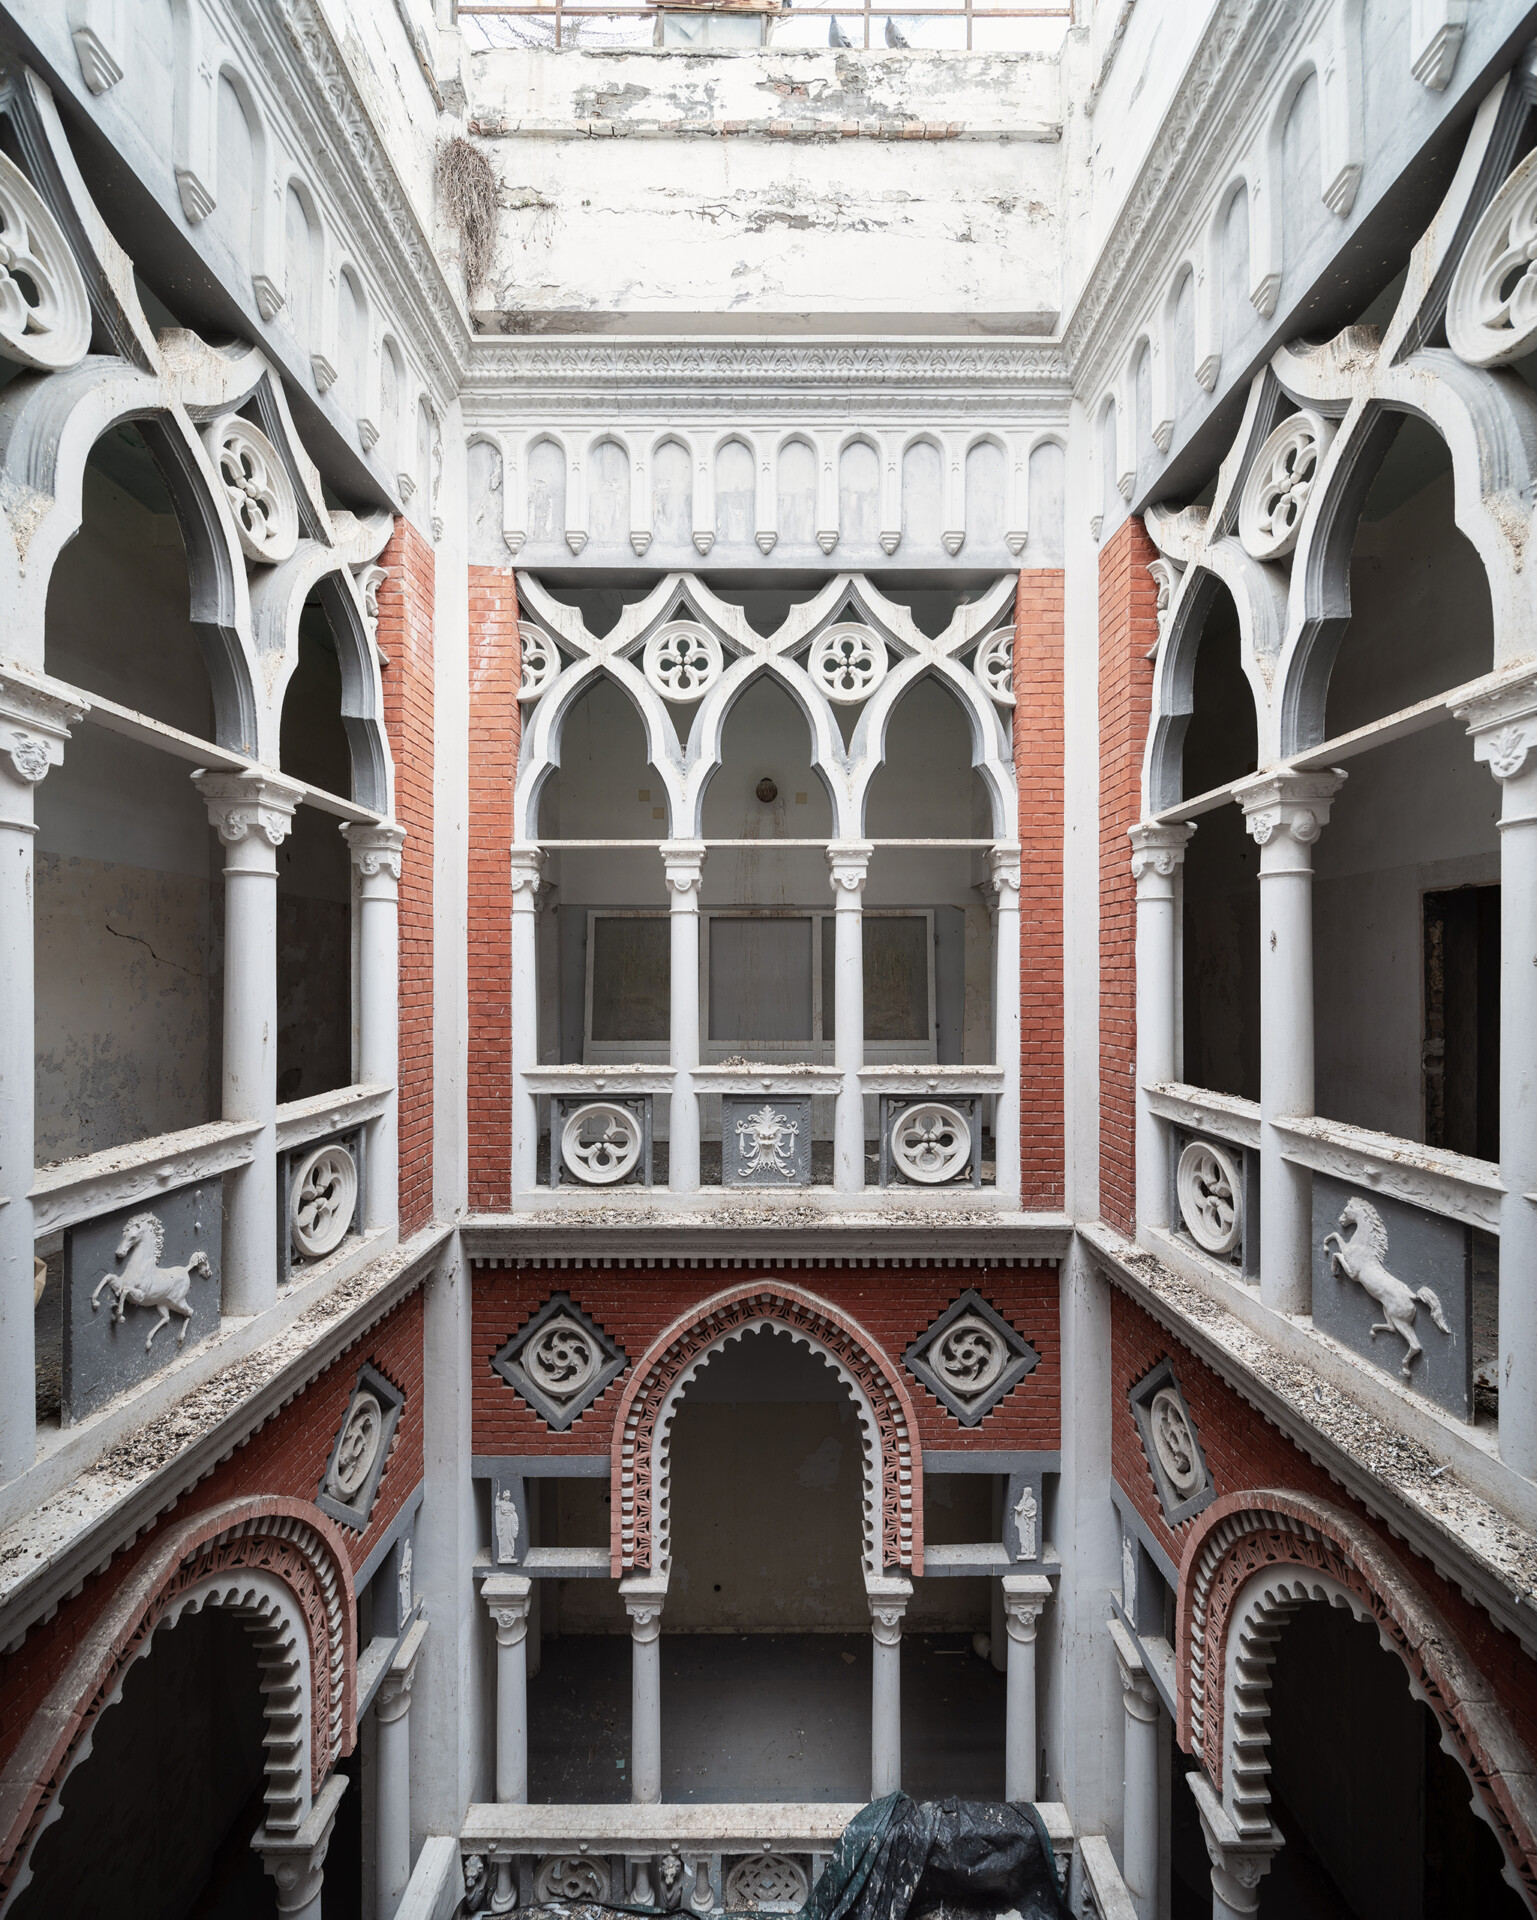 Myths of Pandora - Abandoned Hotel in Italy